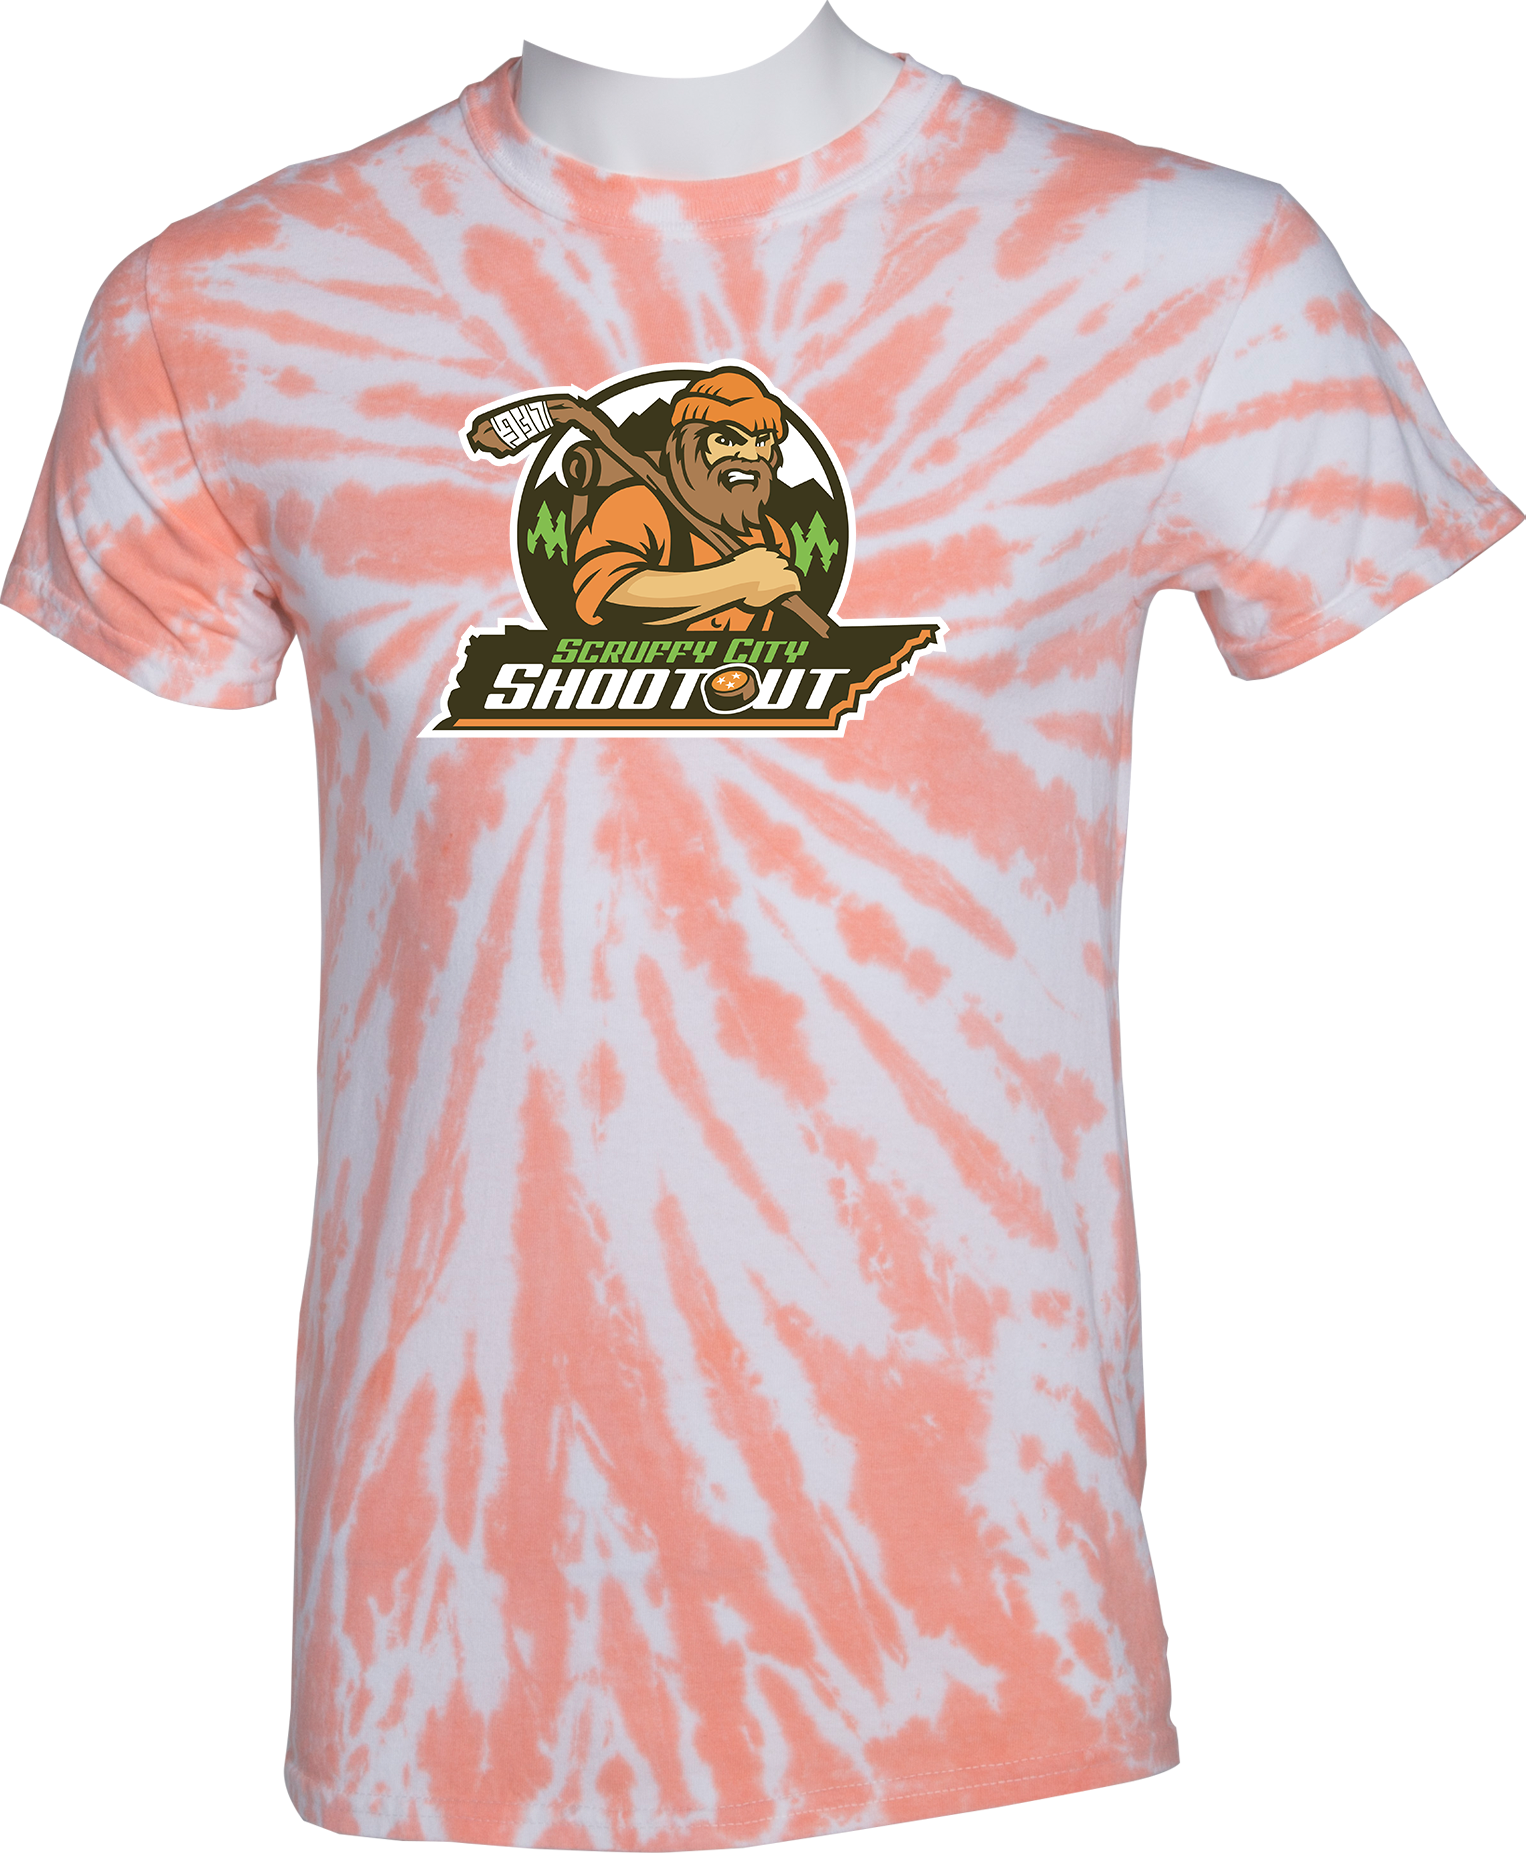 Tie-Dye Short Sleeves - Scruffy City Mite Shootout 2024